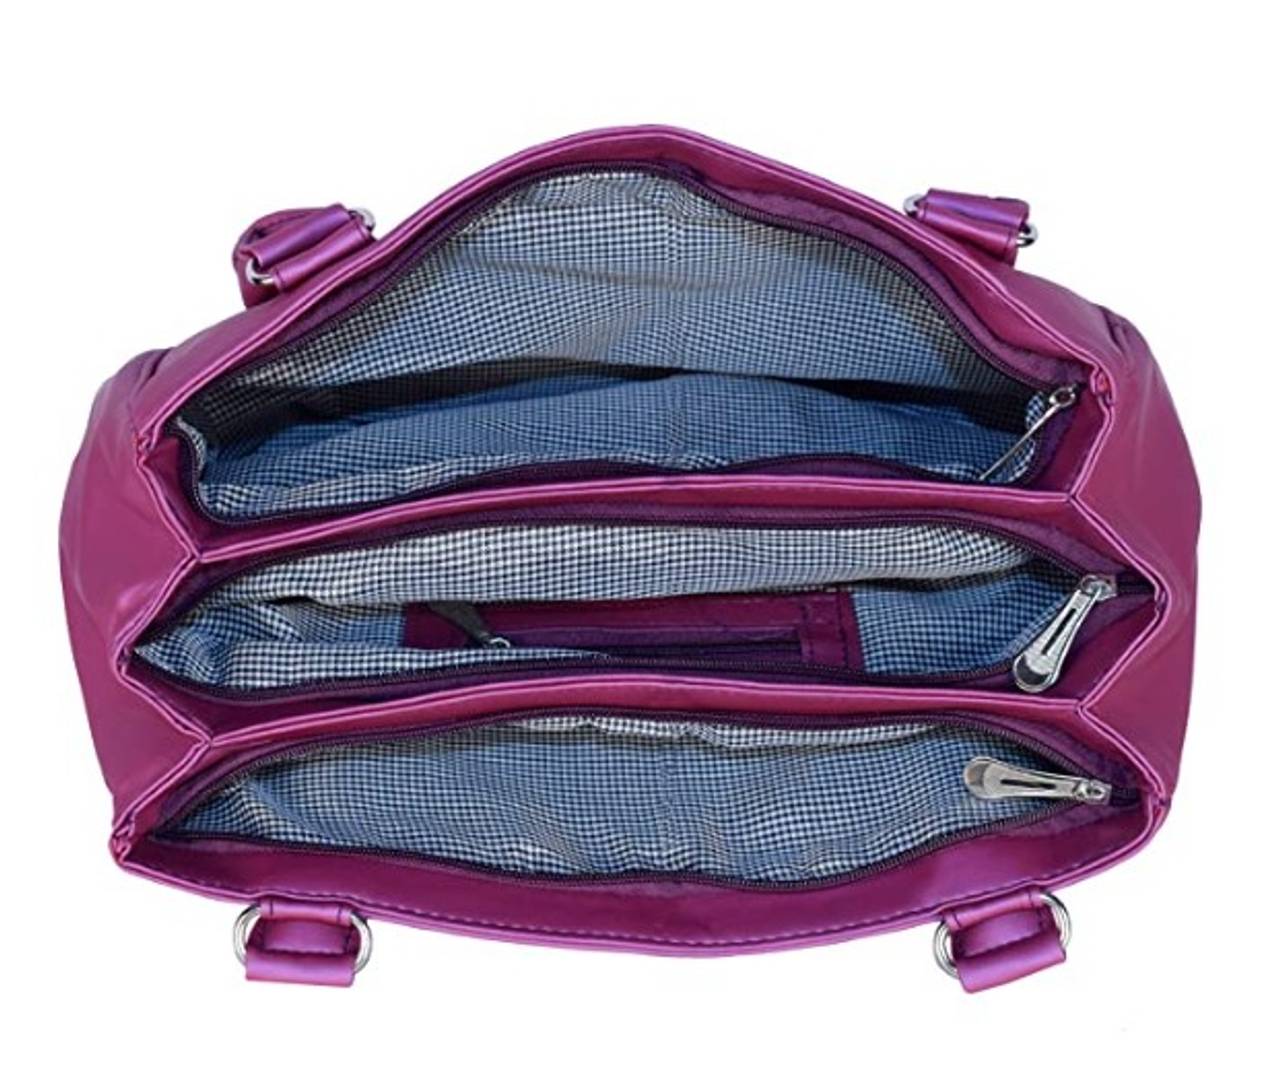 Handbags for Women / Ladies Purses / Ladies bags  Stylish Latest Design Purple